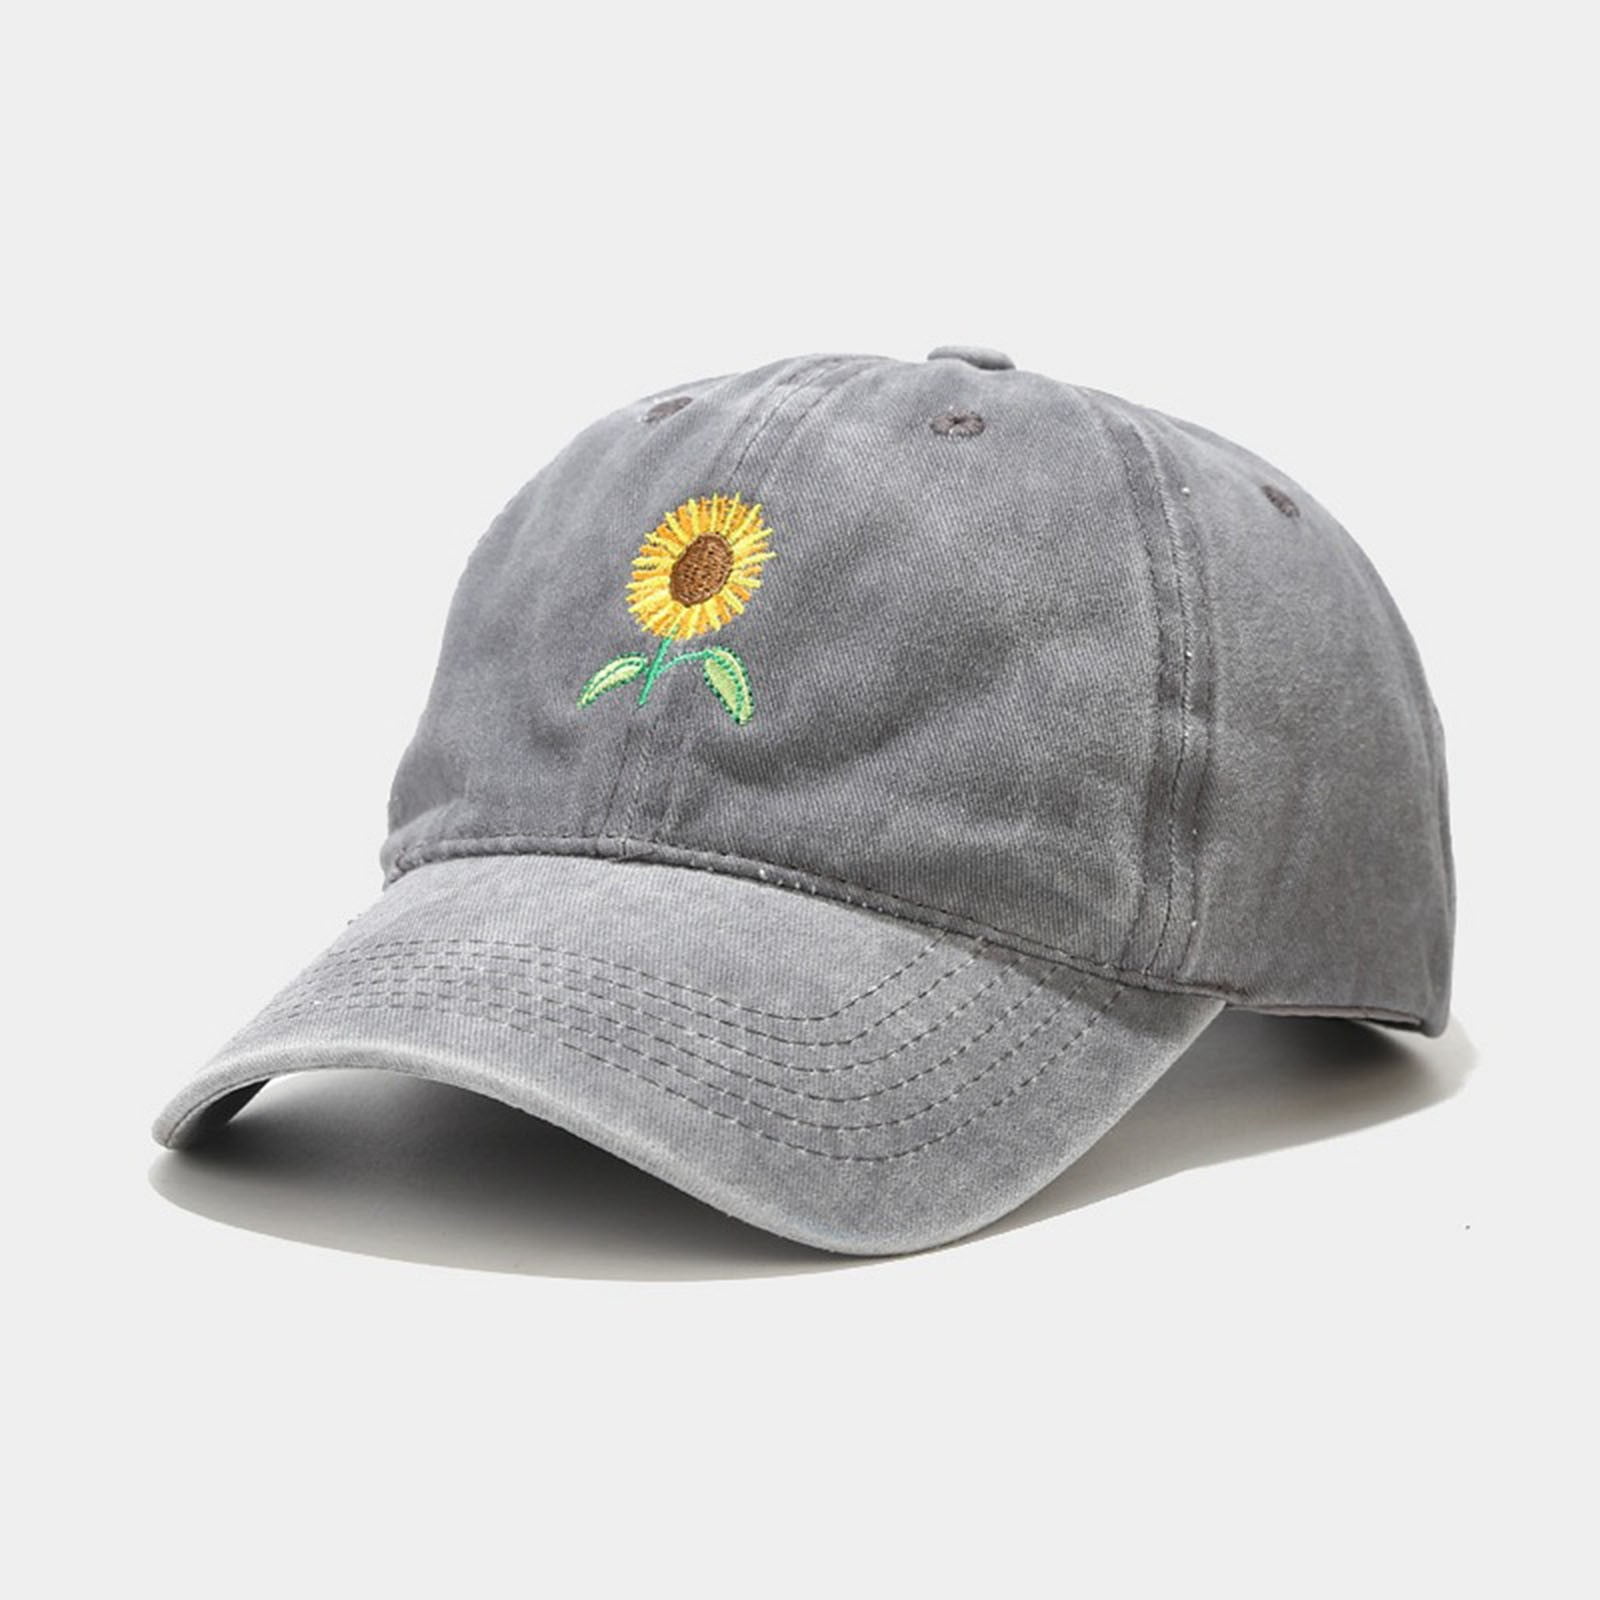 ManxiVoo hats Outdoor Camouflage Adjustable Cap Fishing Hunting Hiking  Basketball Snapback Hat Cotton sun hats for women Grey 